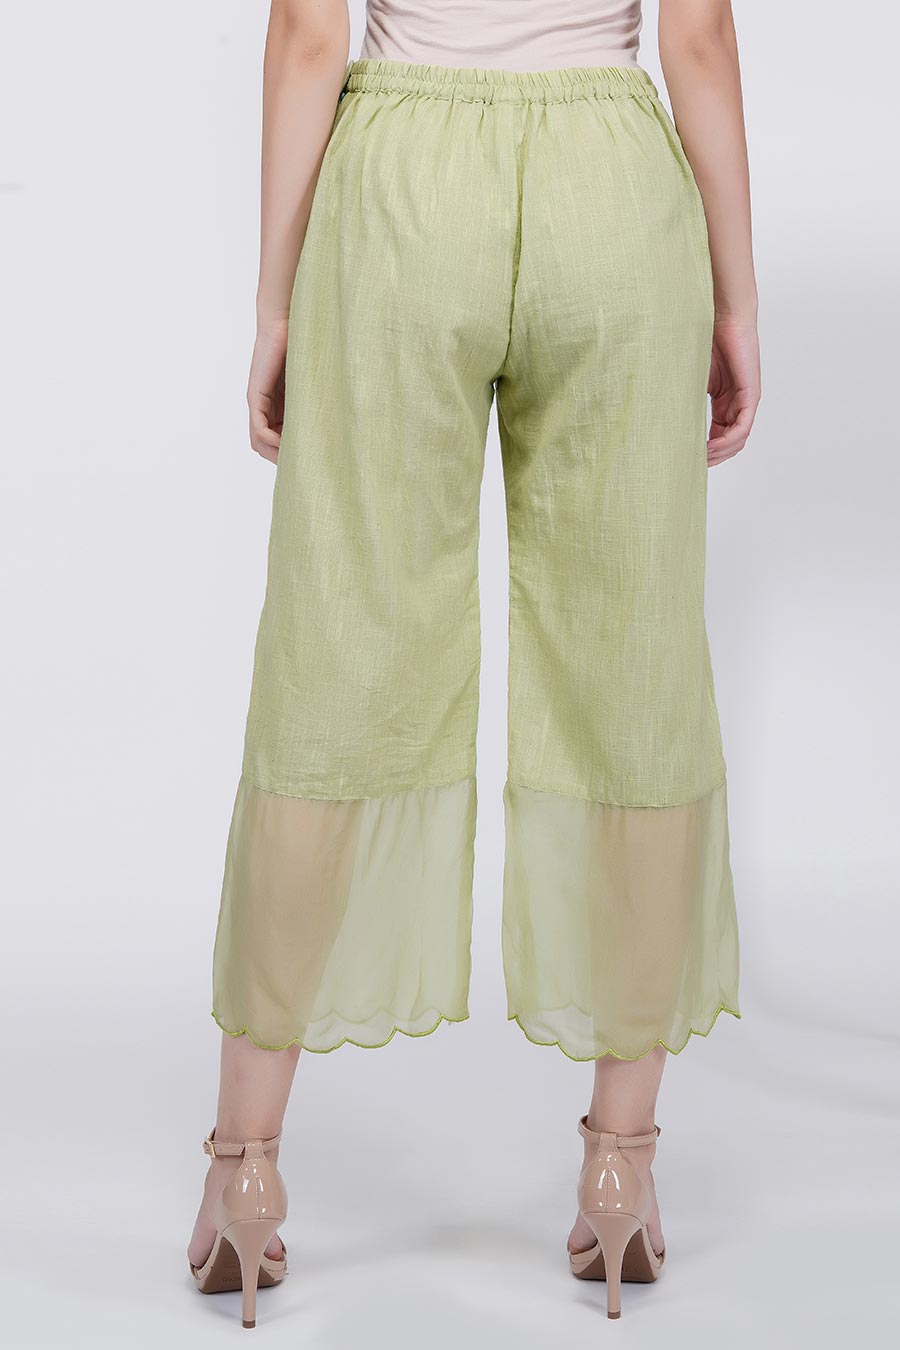 Green Scallop Hemline Pants